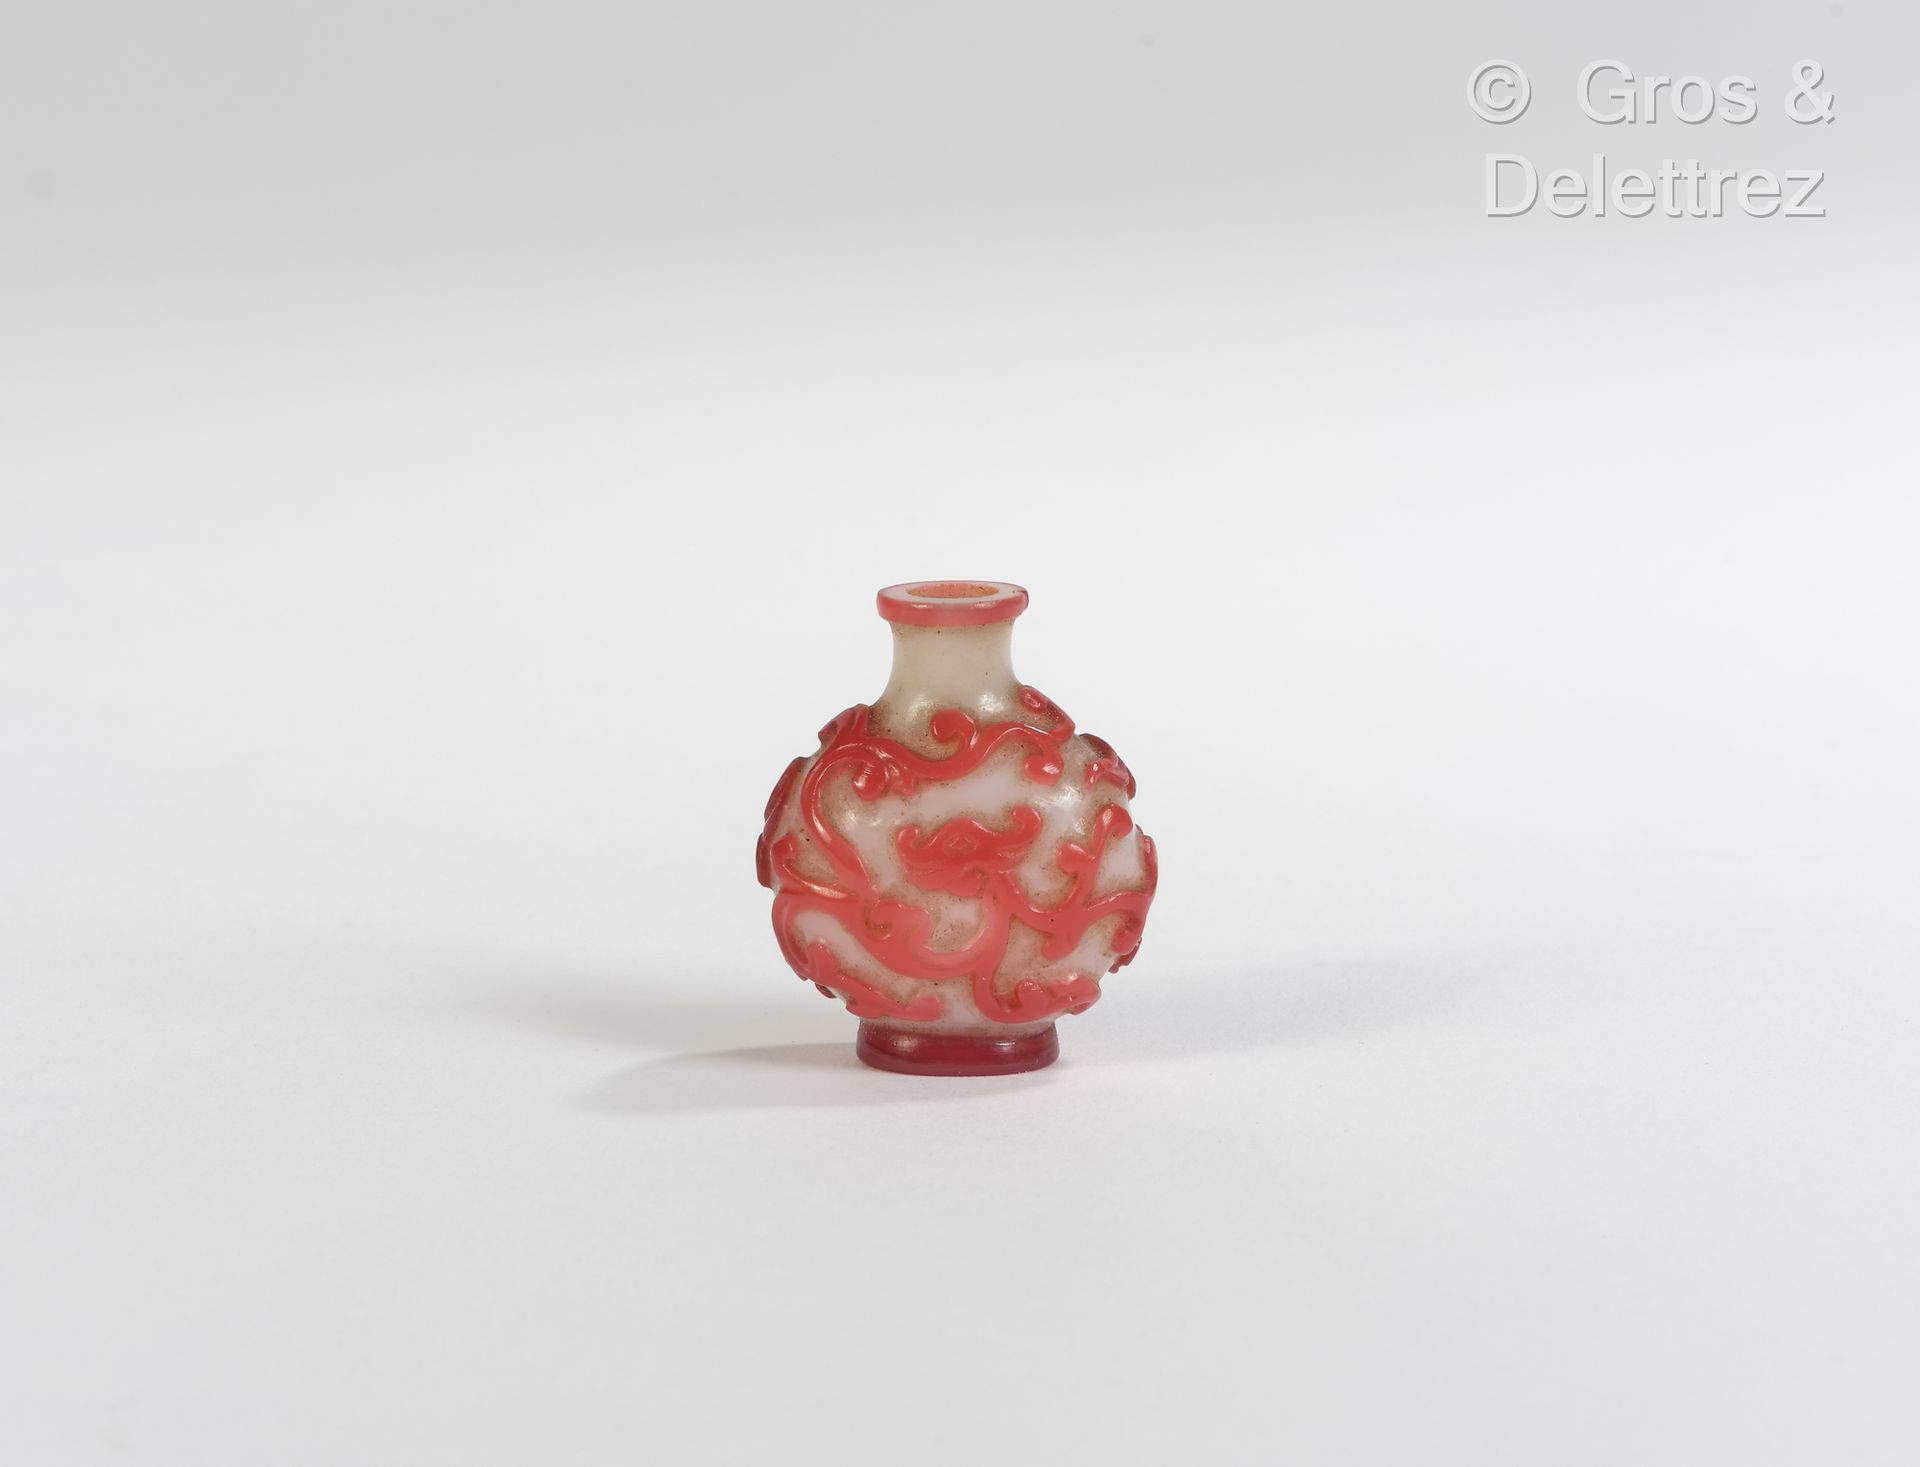 Null China, siglo XVIII
Pequeña tabaquera en miniatura de vidrio rojo sobre fond&hellip;